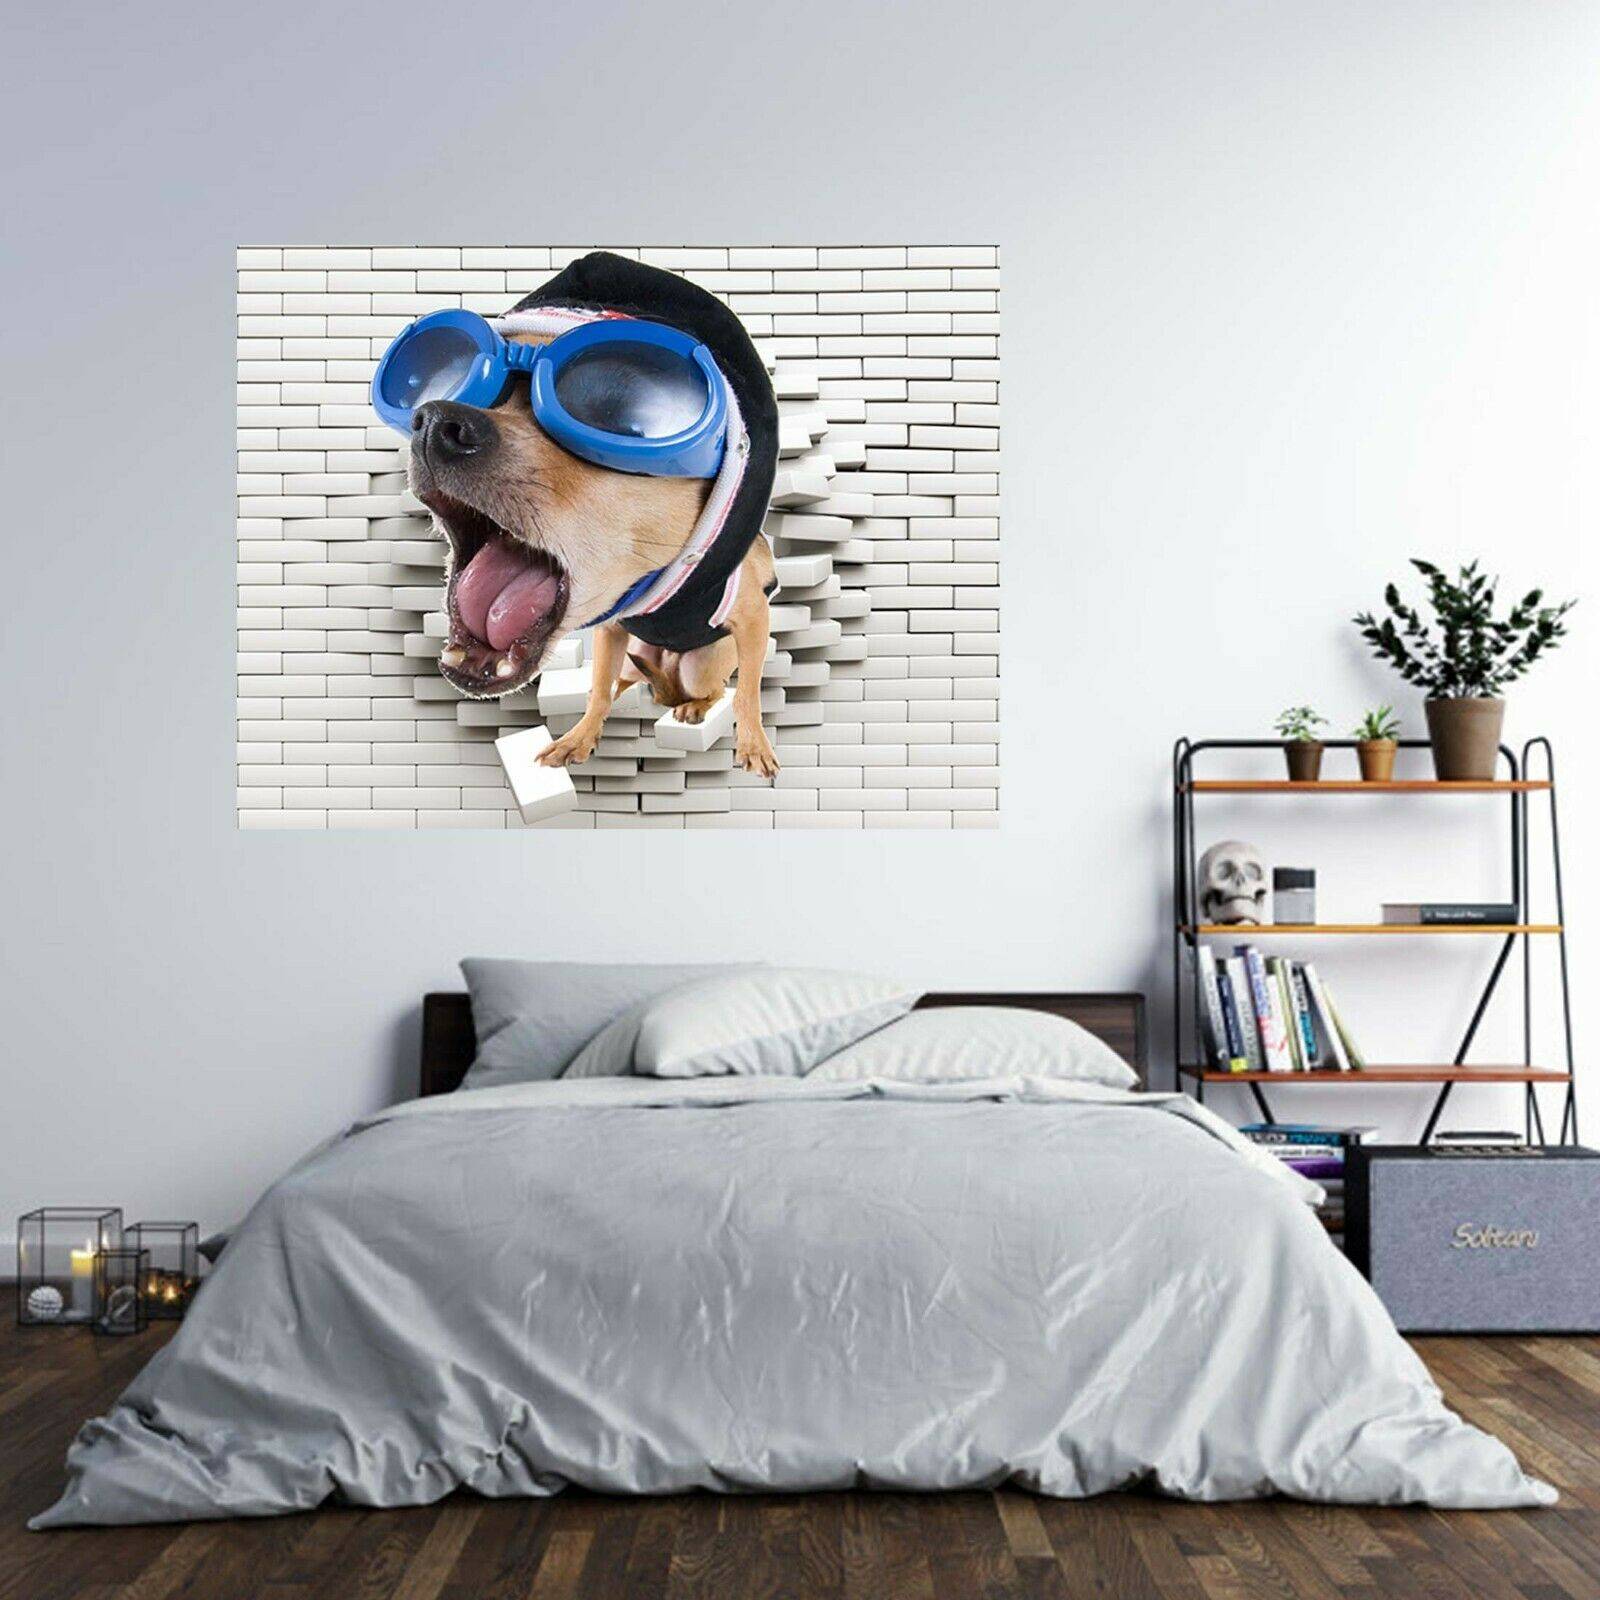 Funny Dog Poster- Wall Sticker - Blue Side Studio